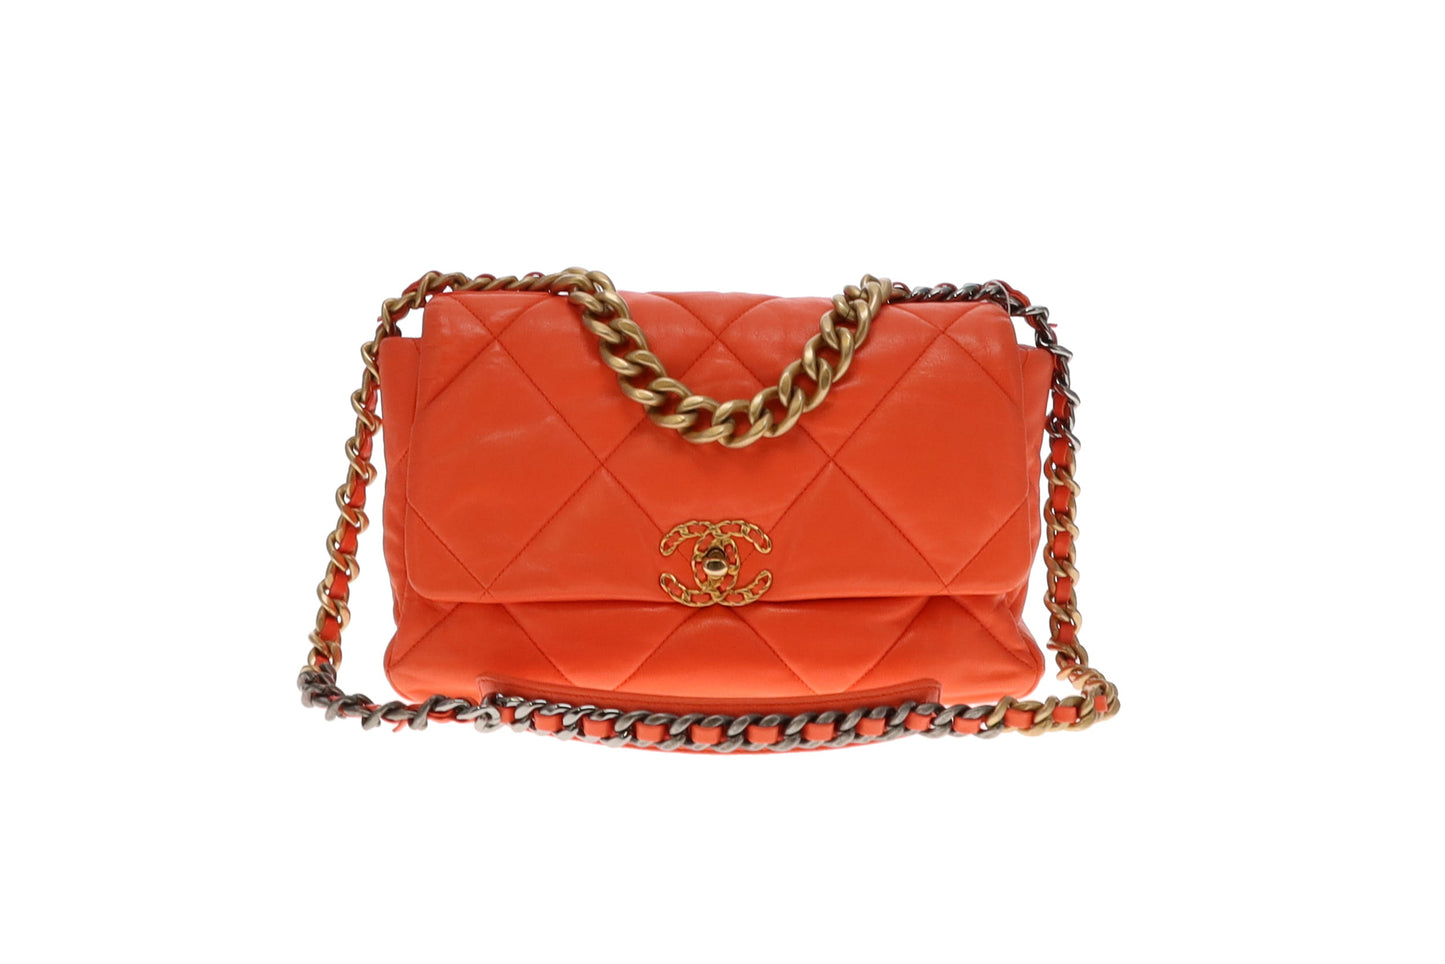 Chanel Orange Lambskin Leather Large 19 Flap Bag 2020